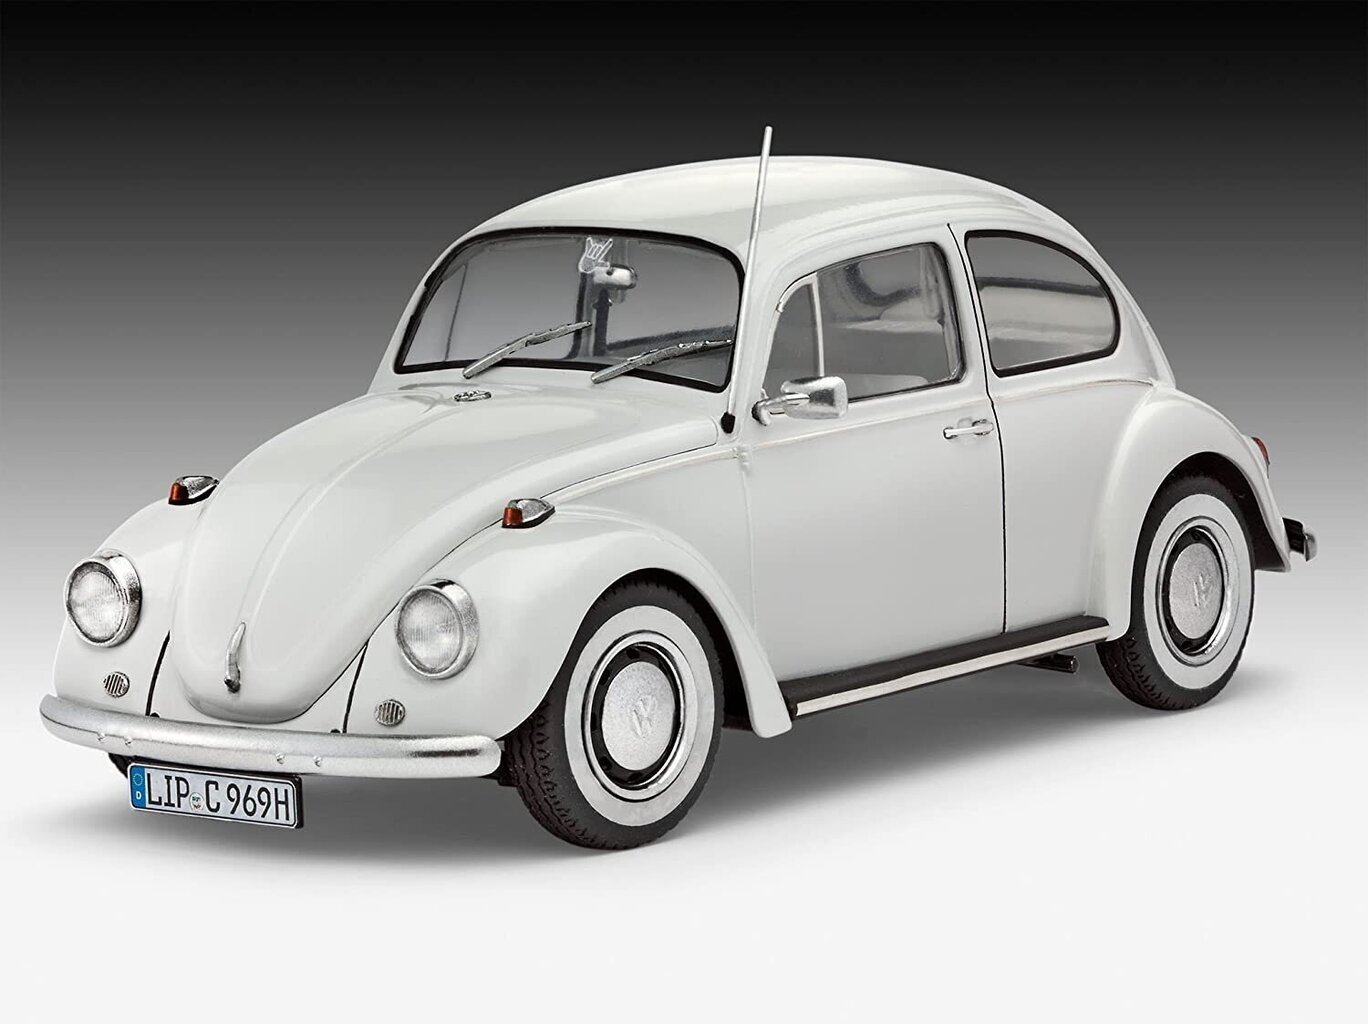 Revell - VW Beetle Limousine 1968, 1/24, 07083 cena un informācija | Konstruktori | 220.lv